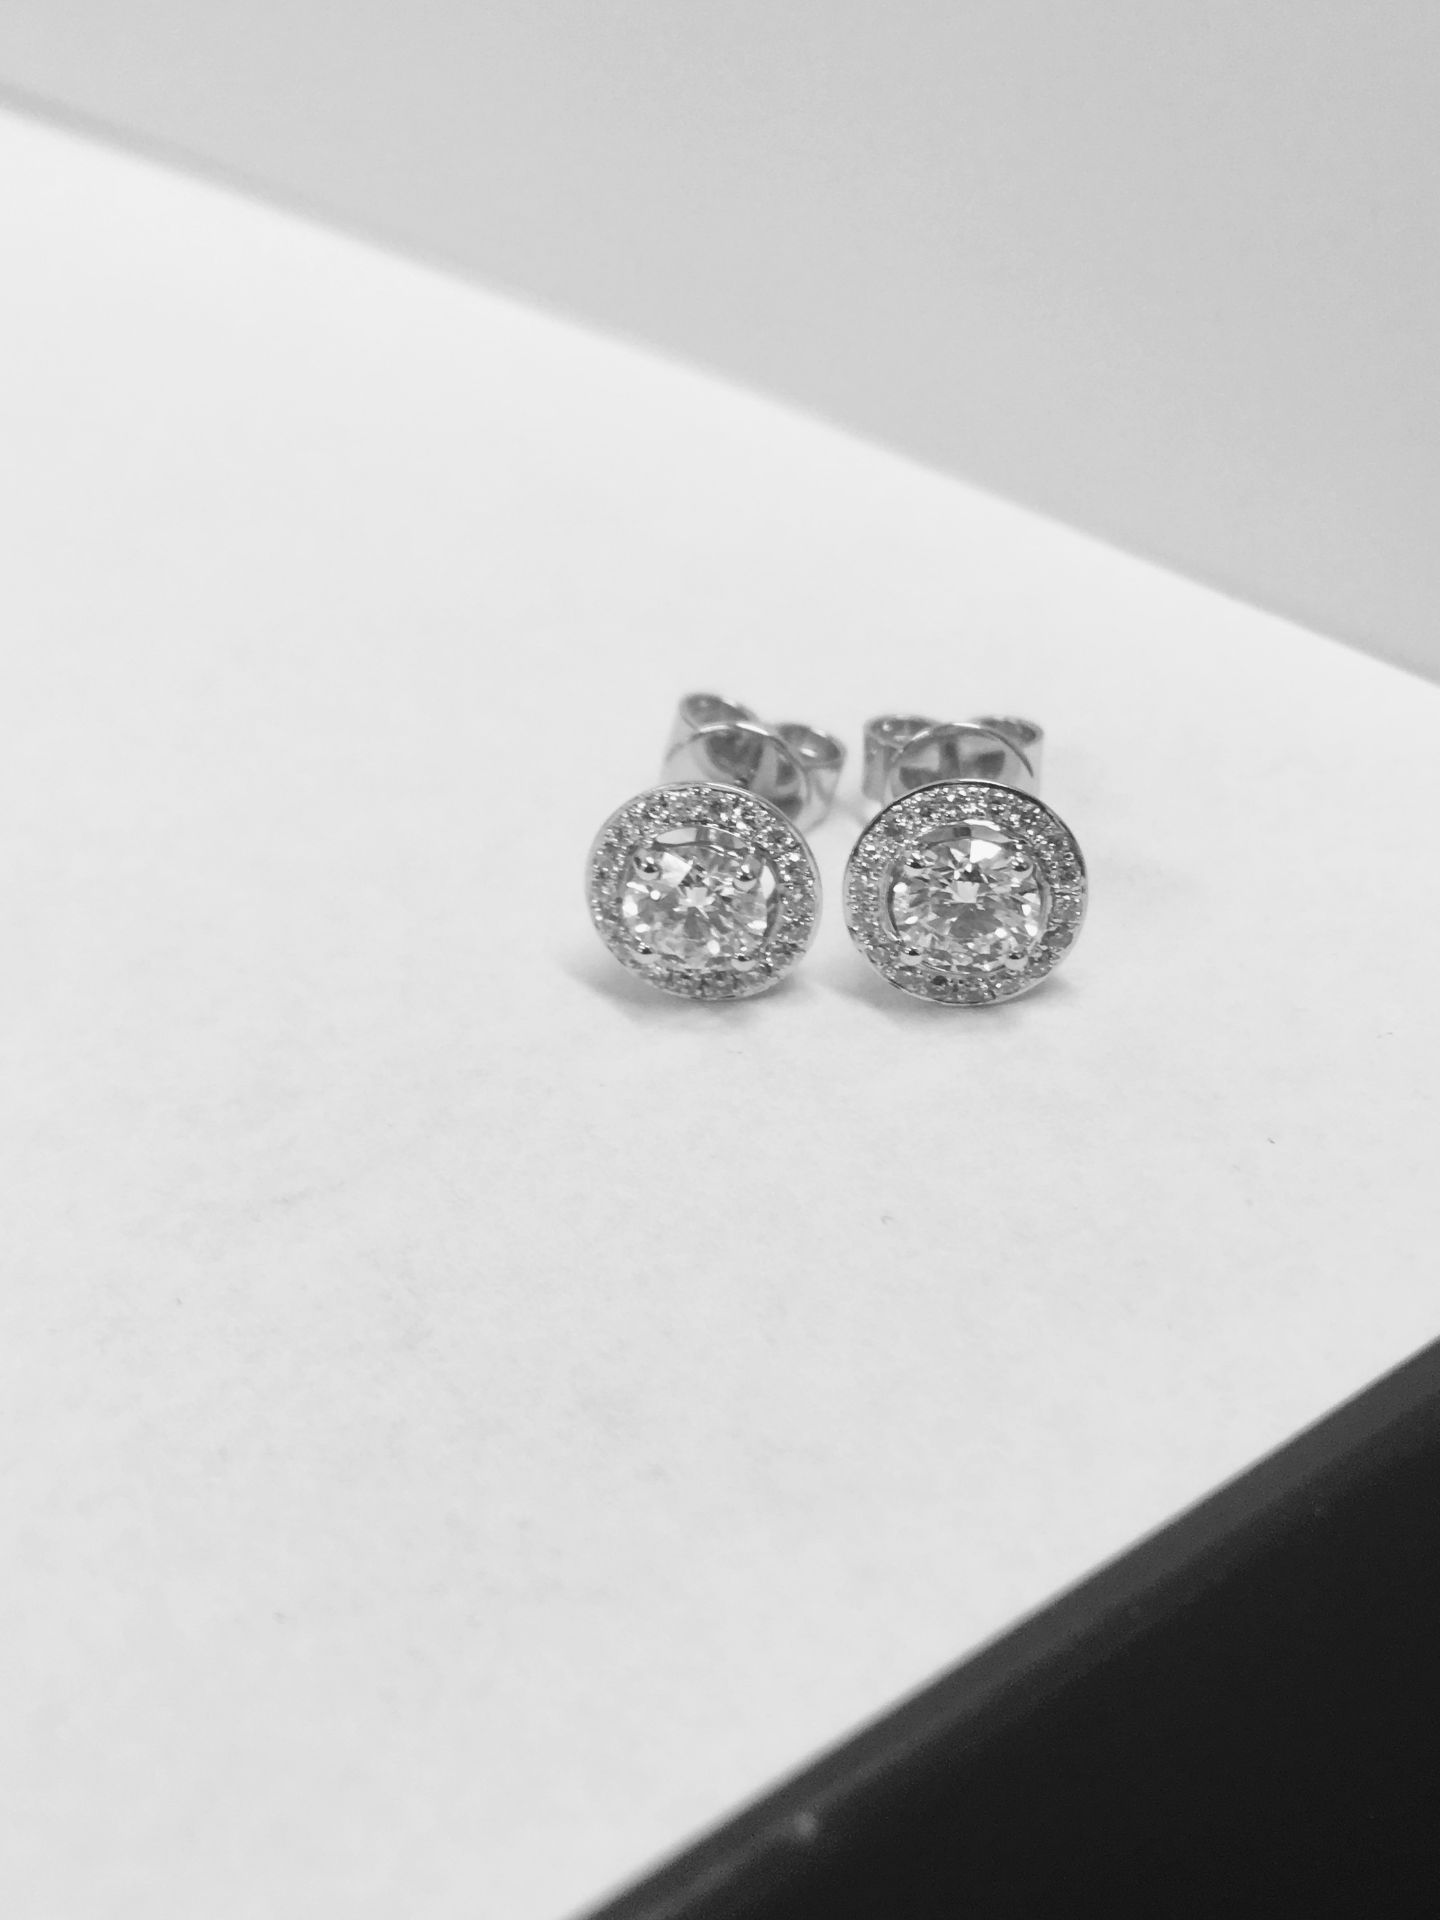 18ct white gold diamond Halo stud earrings ,0.92ct h colour vs grade diamonds surrounded by diamonds - Image 2 of 4